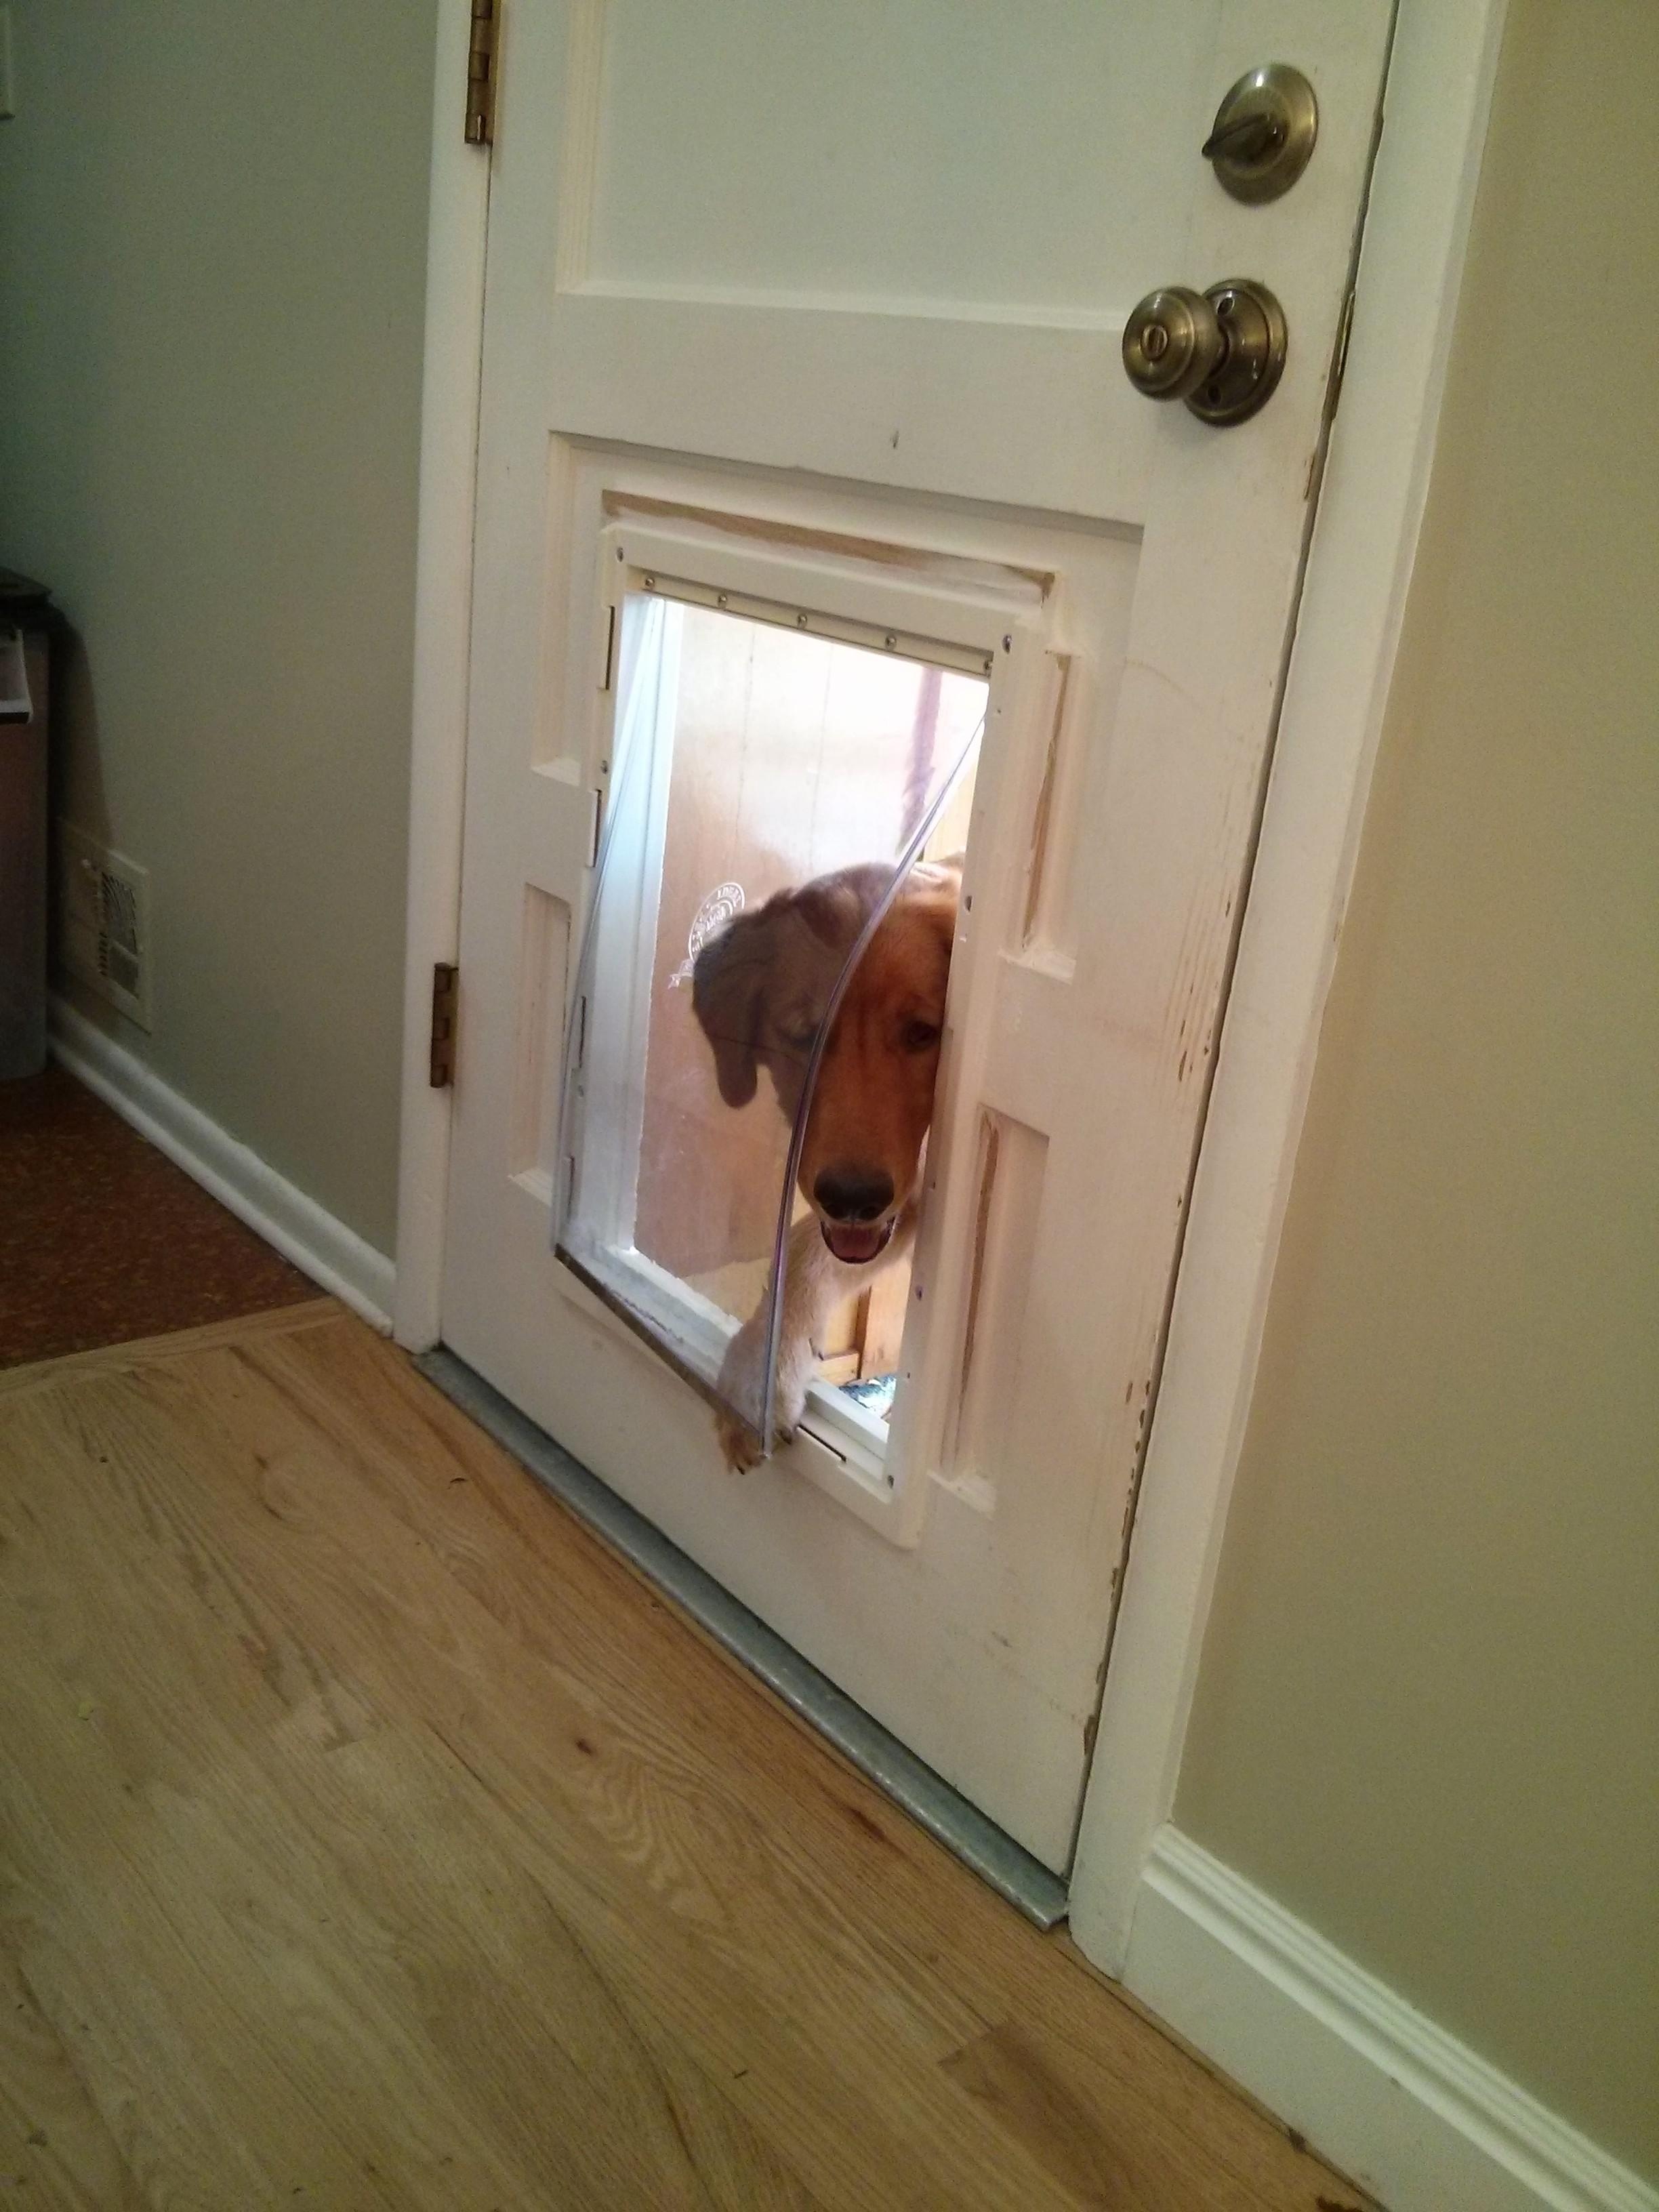 Bender peeking his head through the door. Not sure what to make of it. 